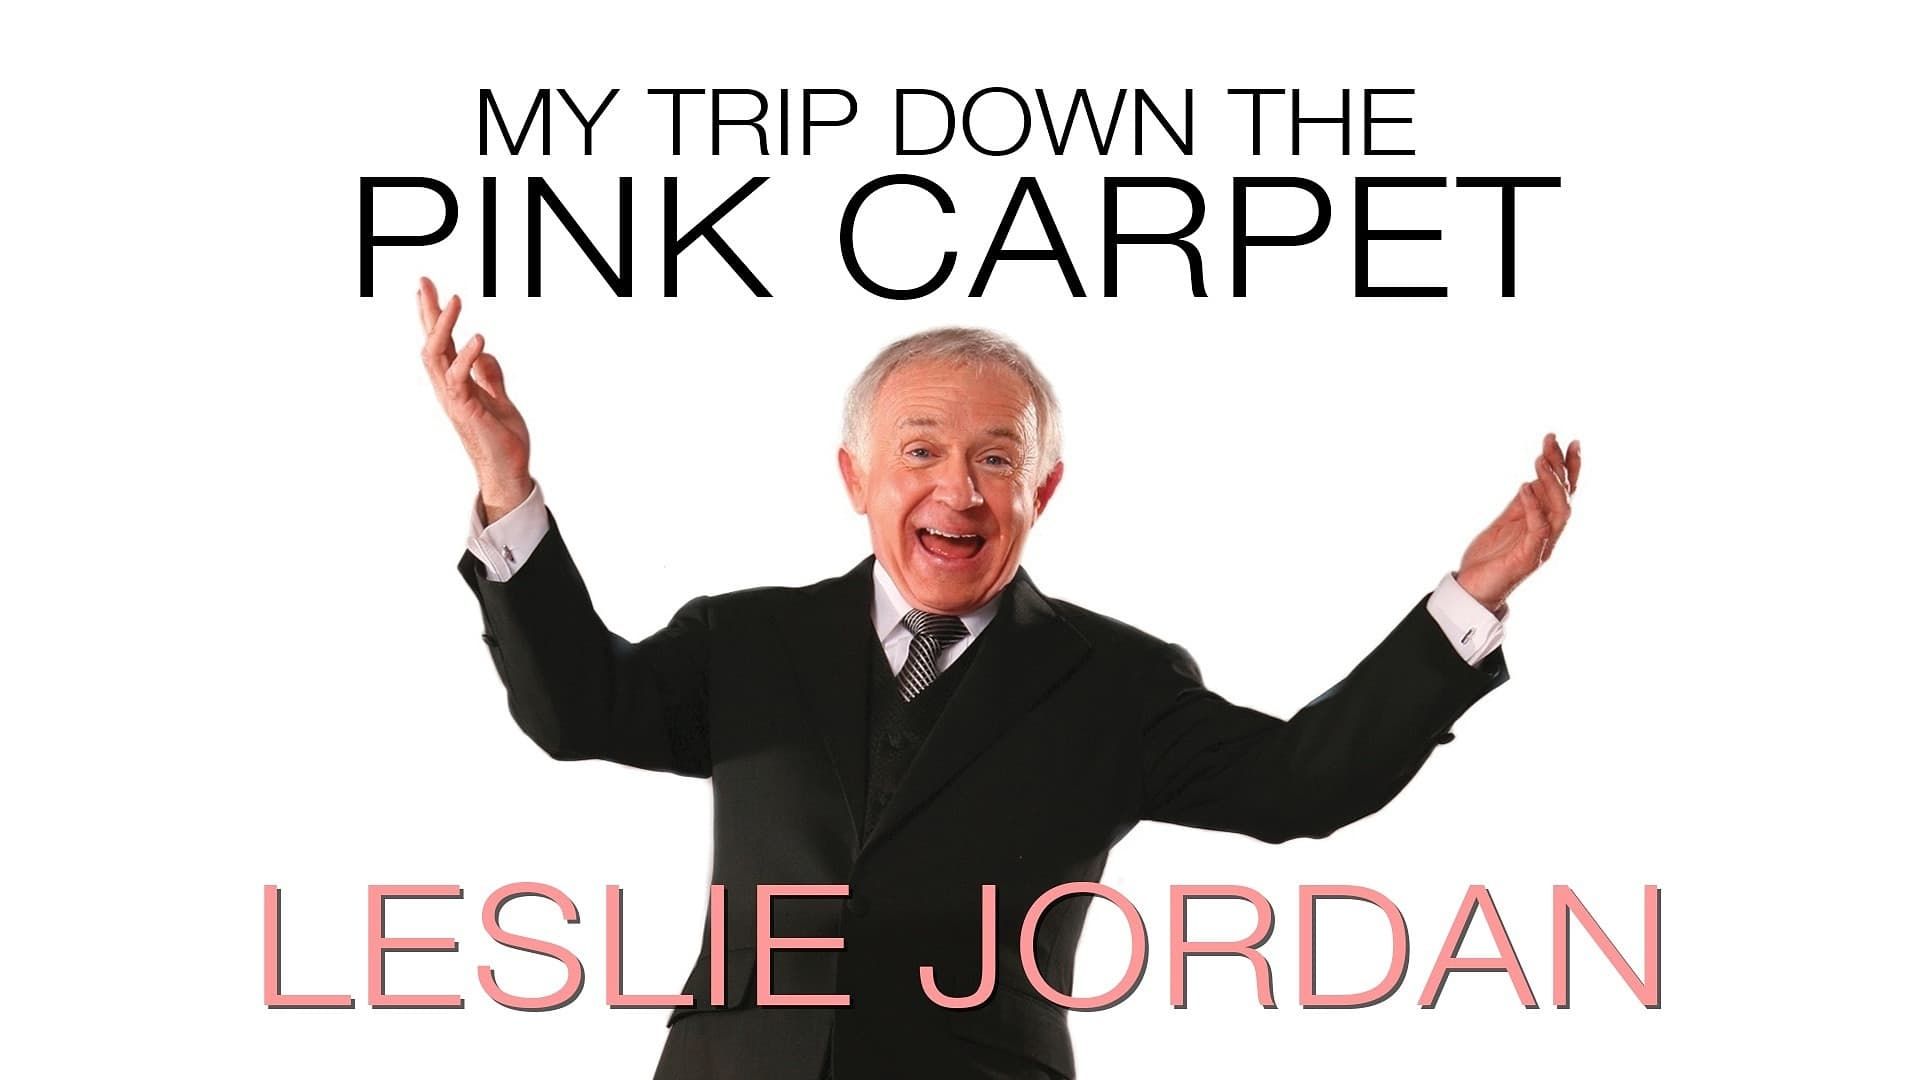 Leslie Jordan: My Trip Down the Pink Carpet background